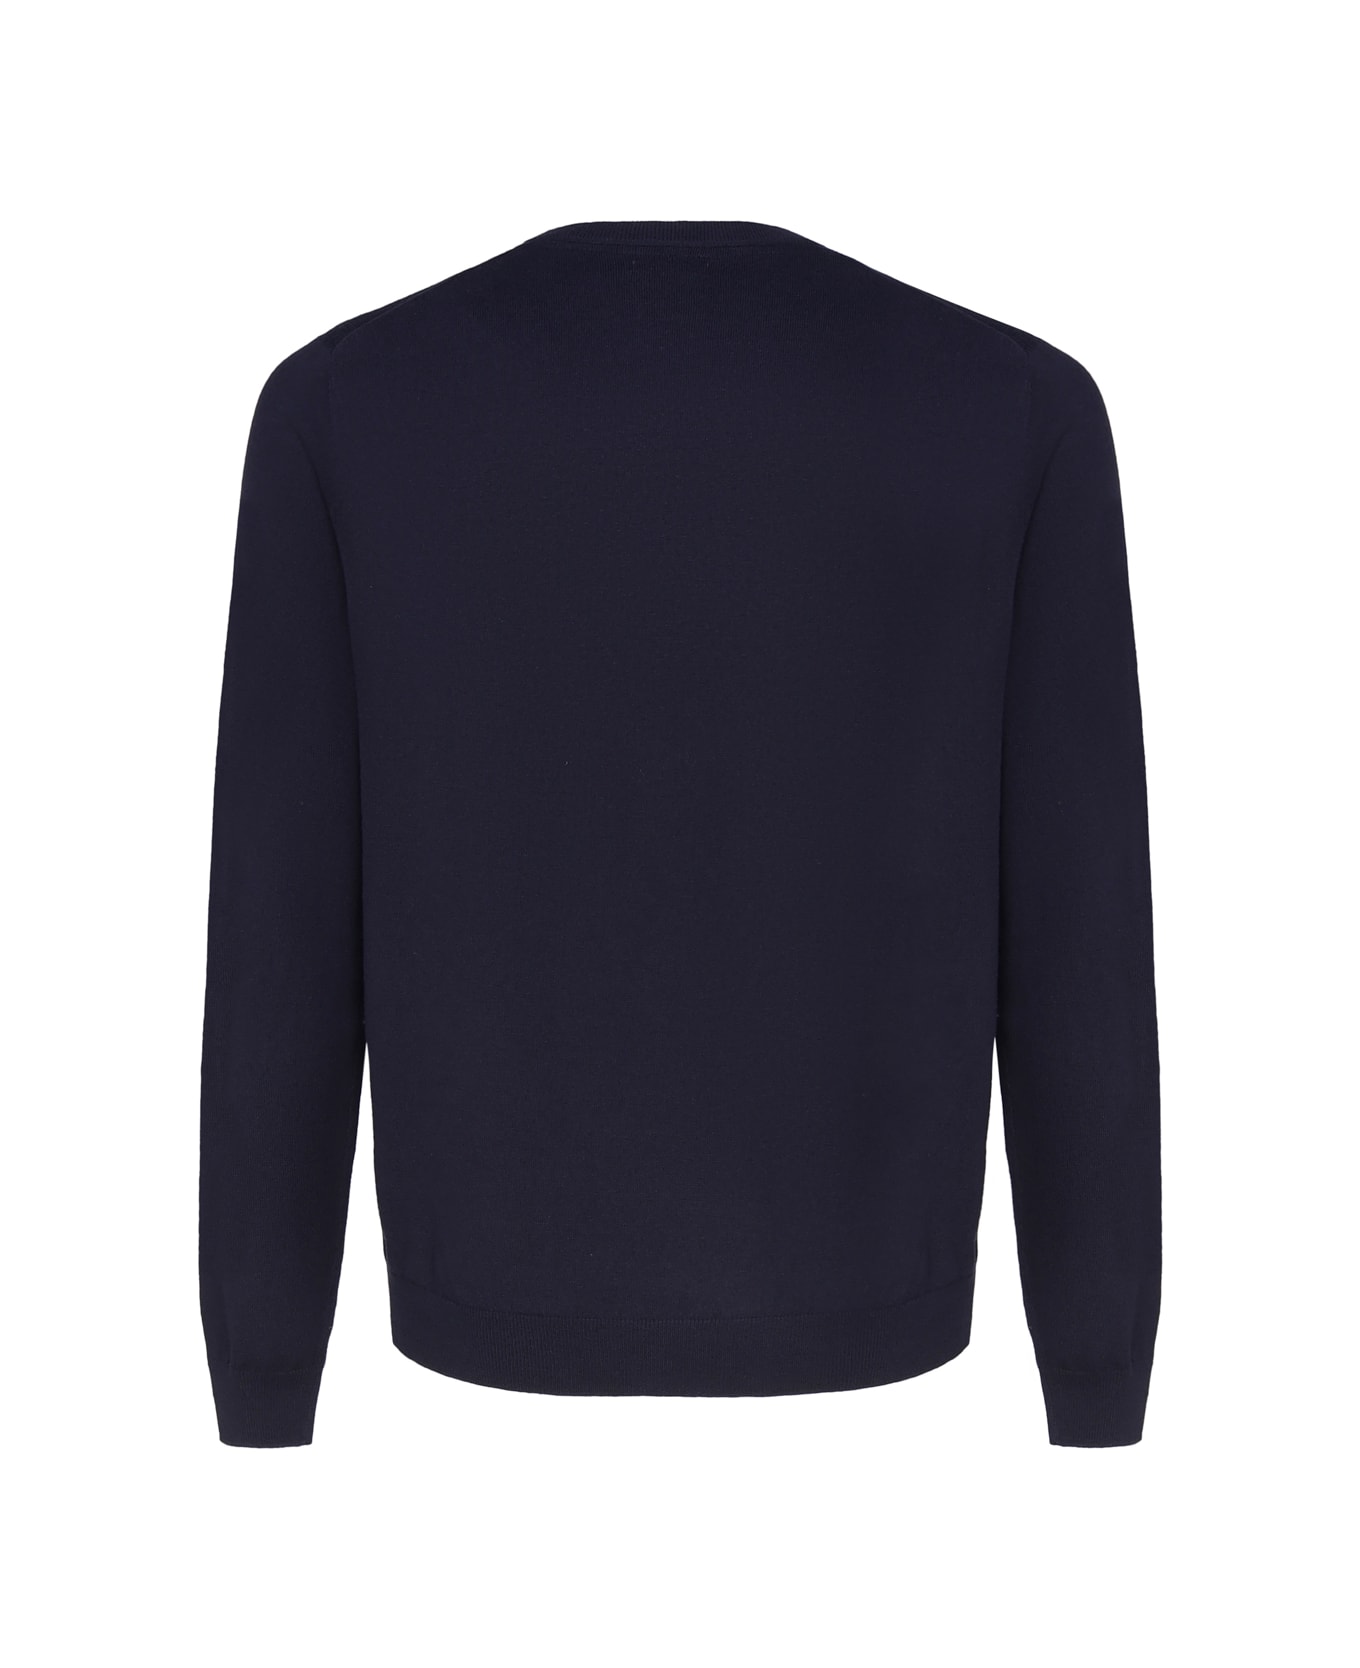 Sun 68 Sweater With Logo - Blue